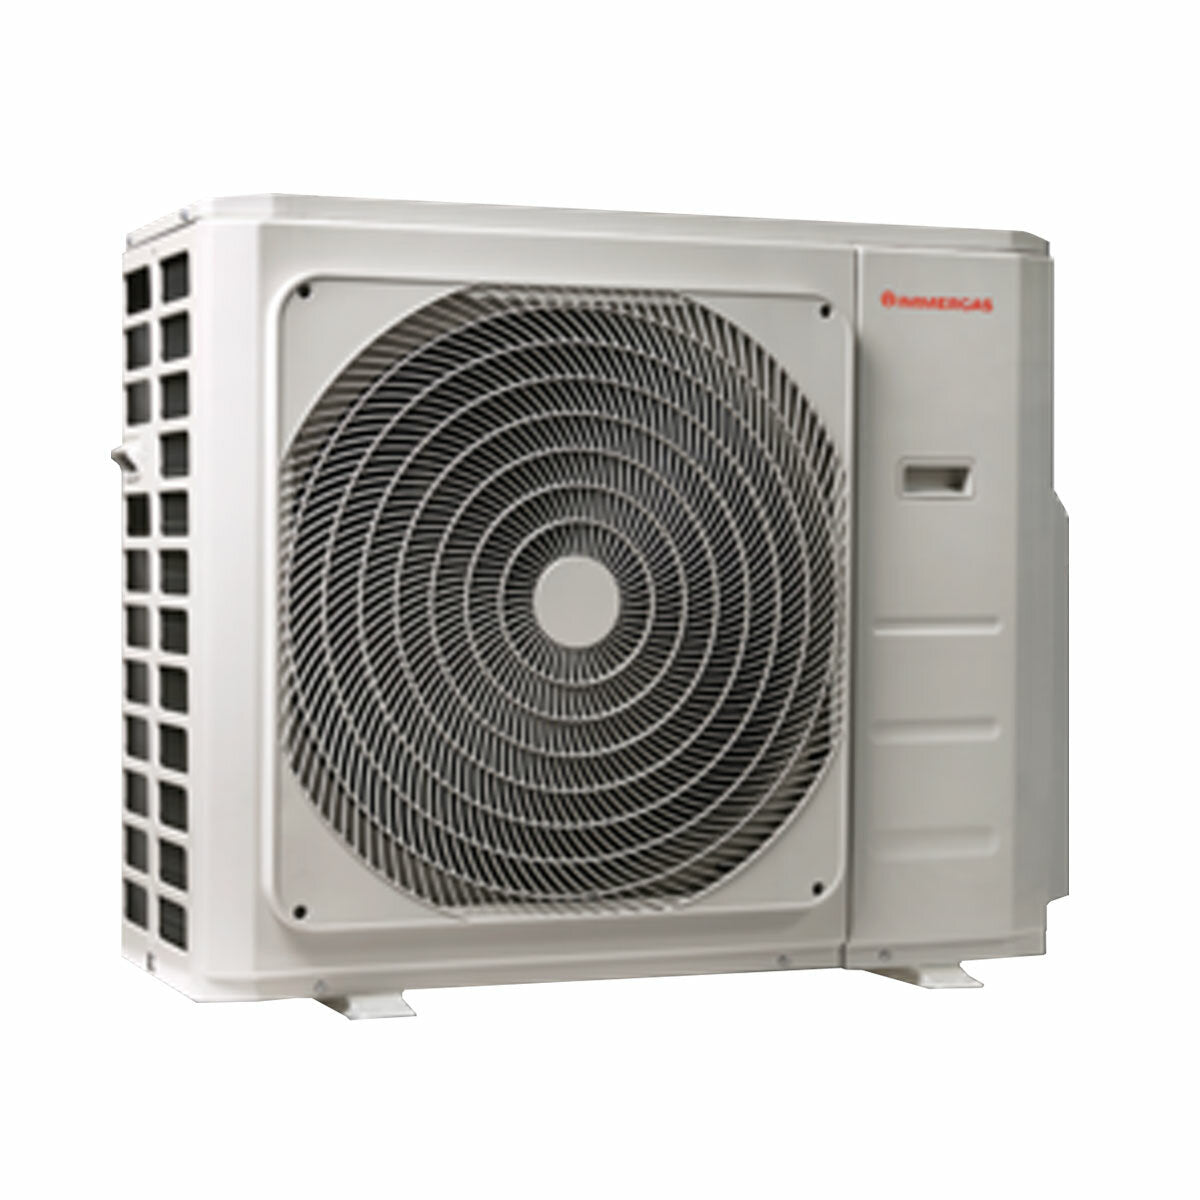 Immergas THOR dual split air conditioner 9000+18000 BTU inverter A++ external unit 6.2 kW